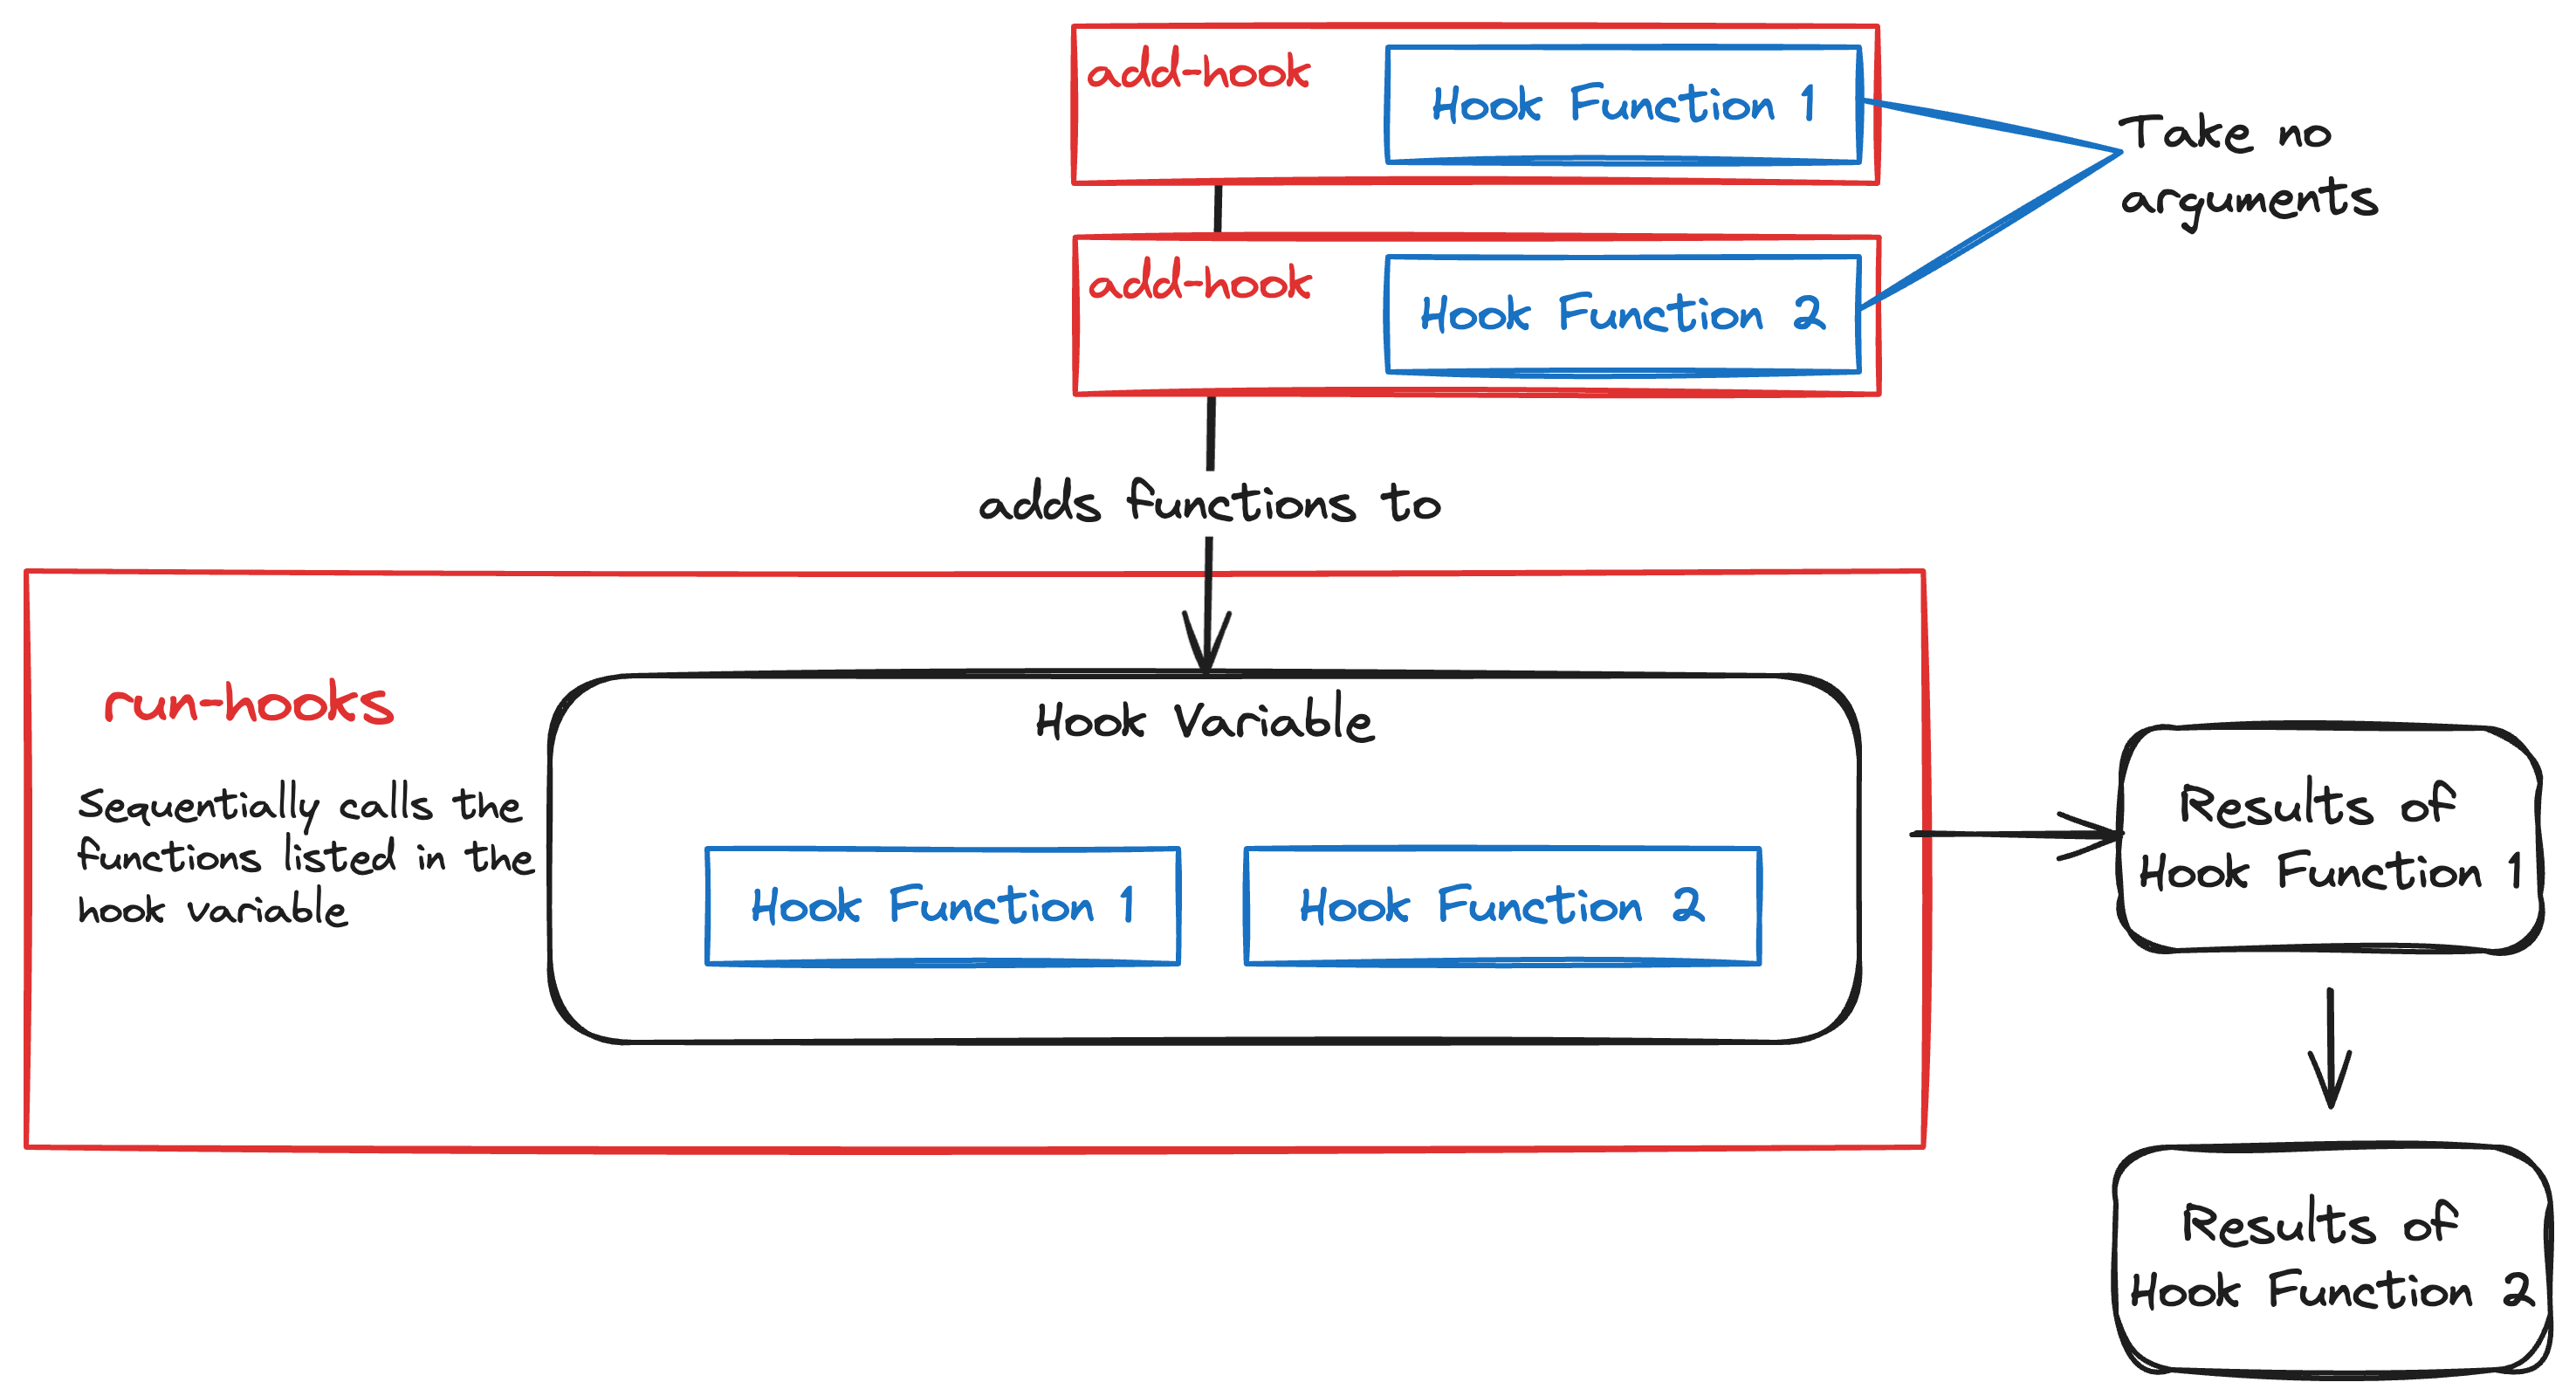 hooks-diagram-2.png